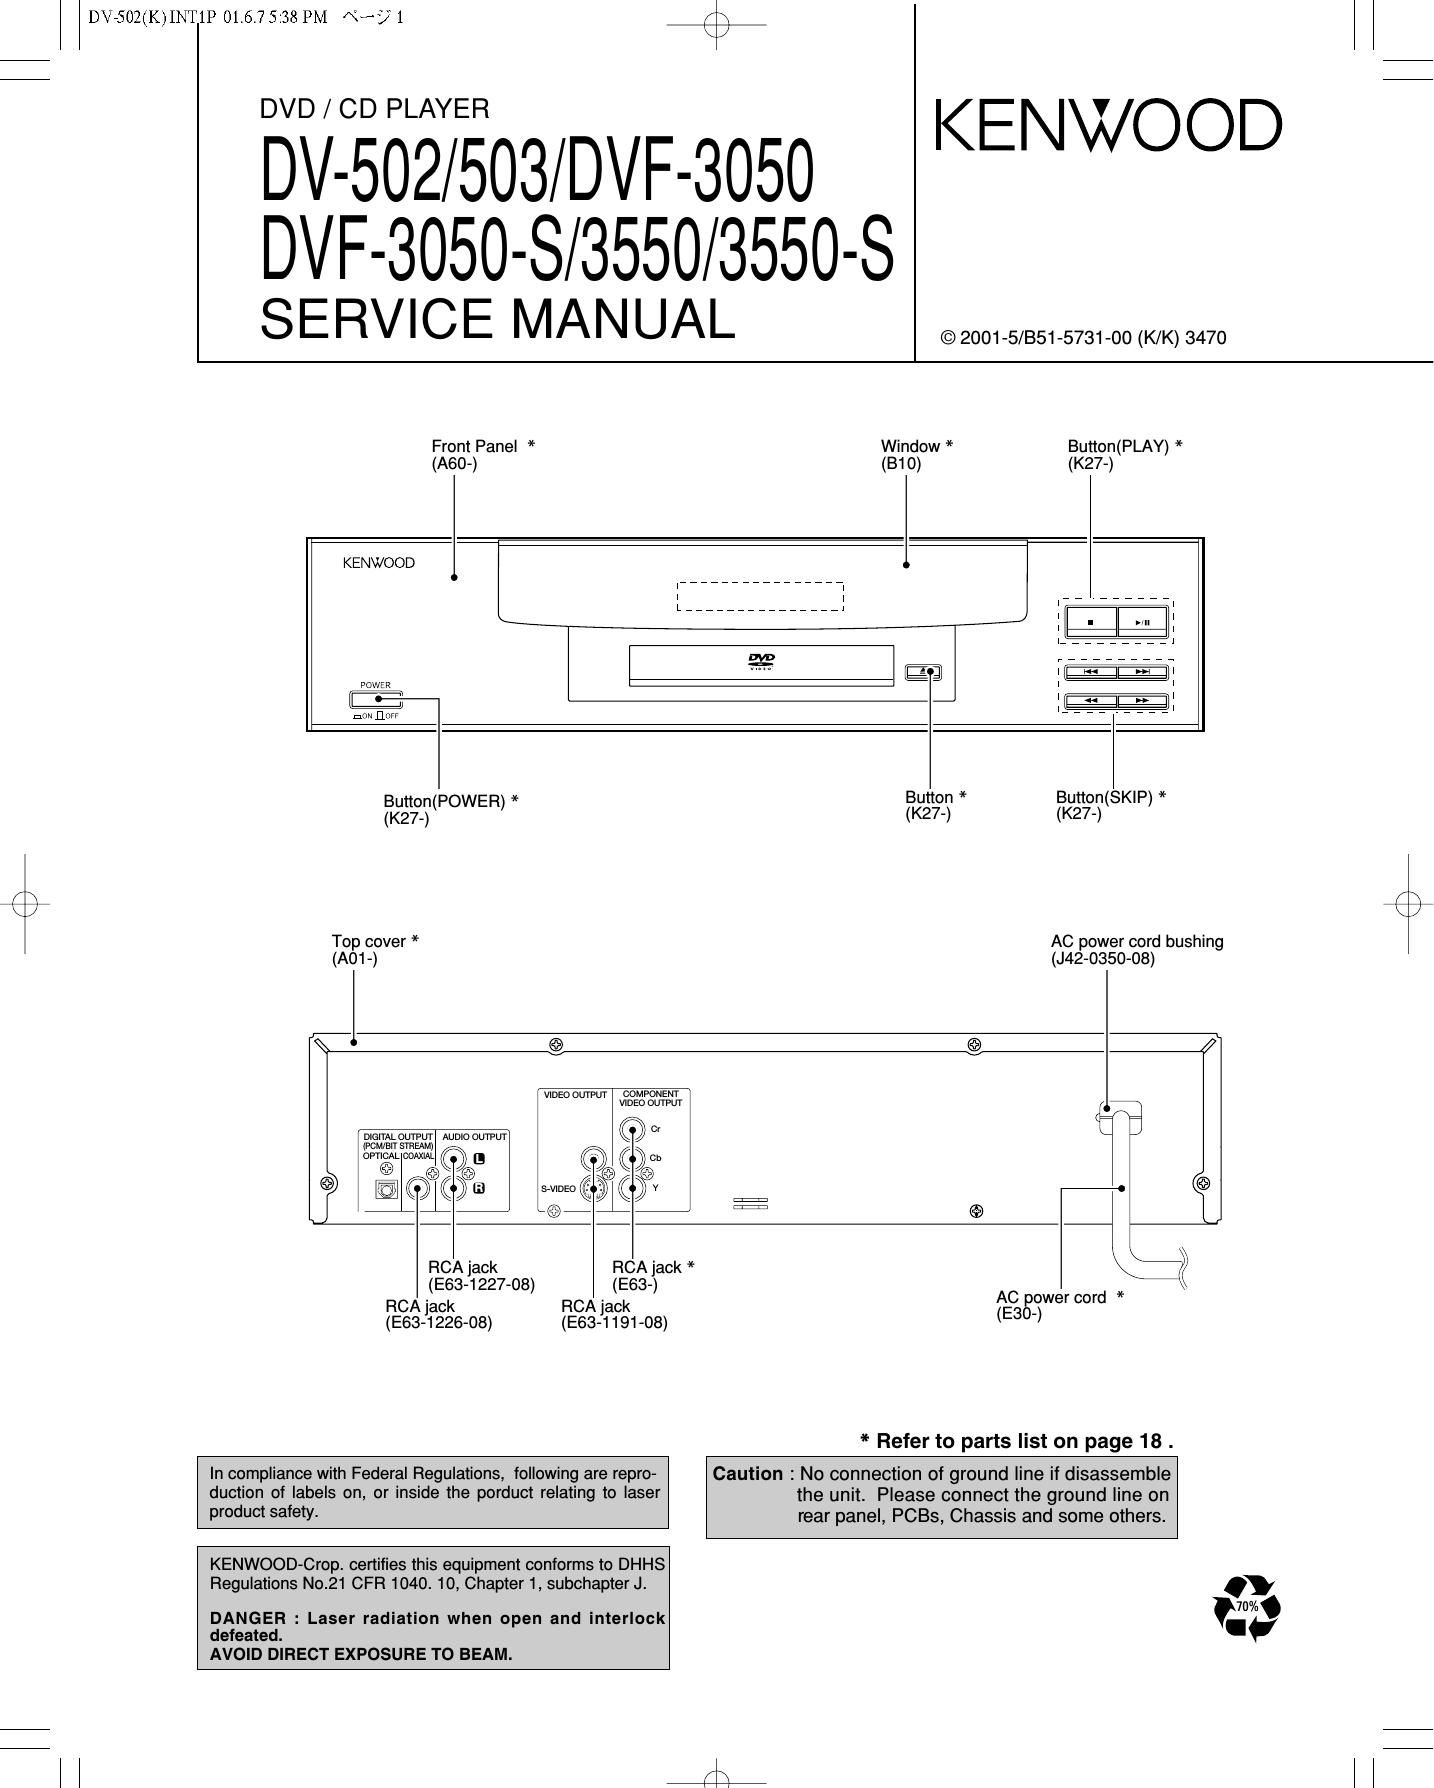 Kenwood DVF 3550 S Service Manual